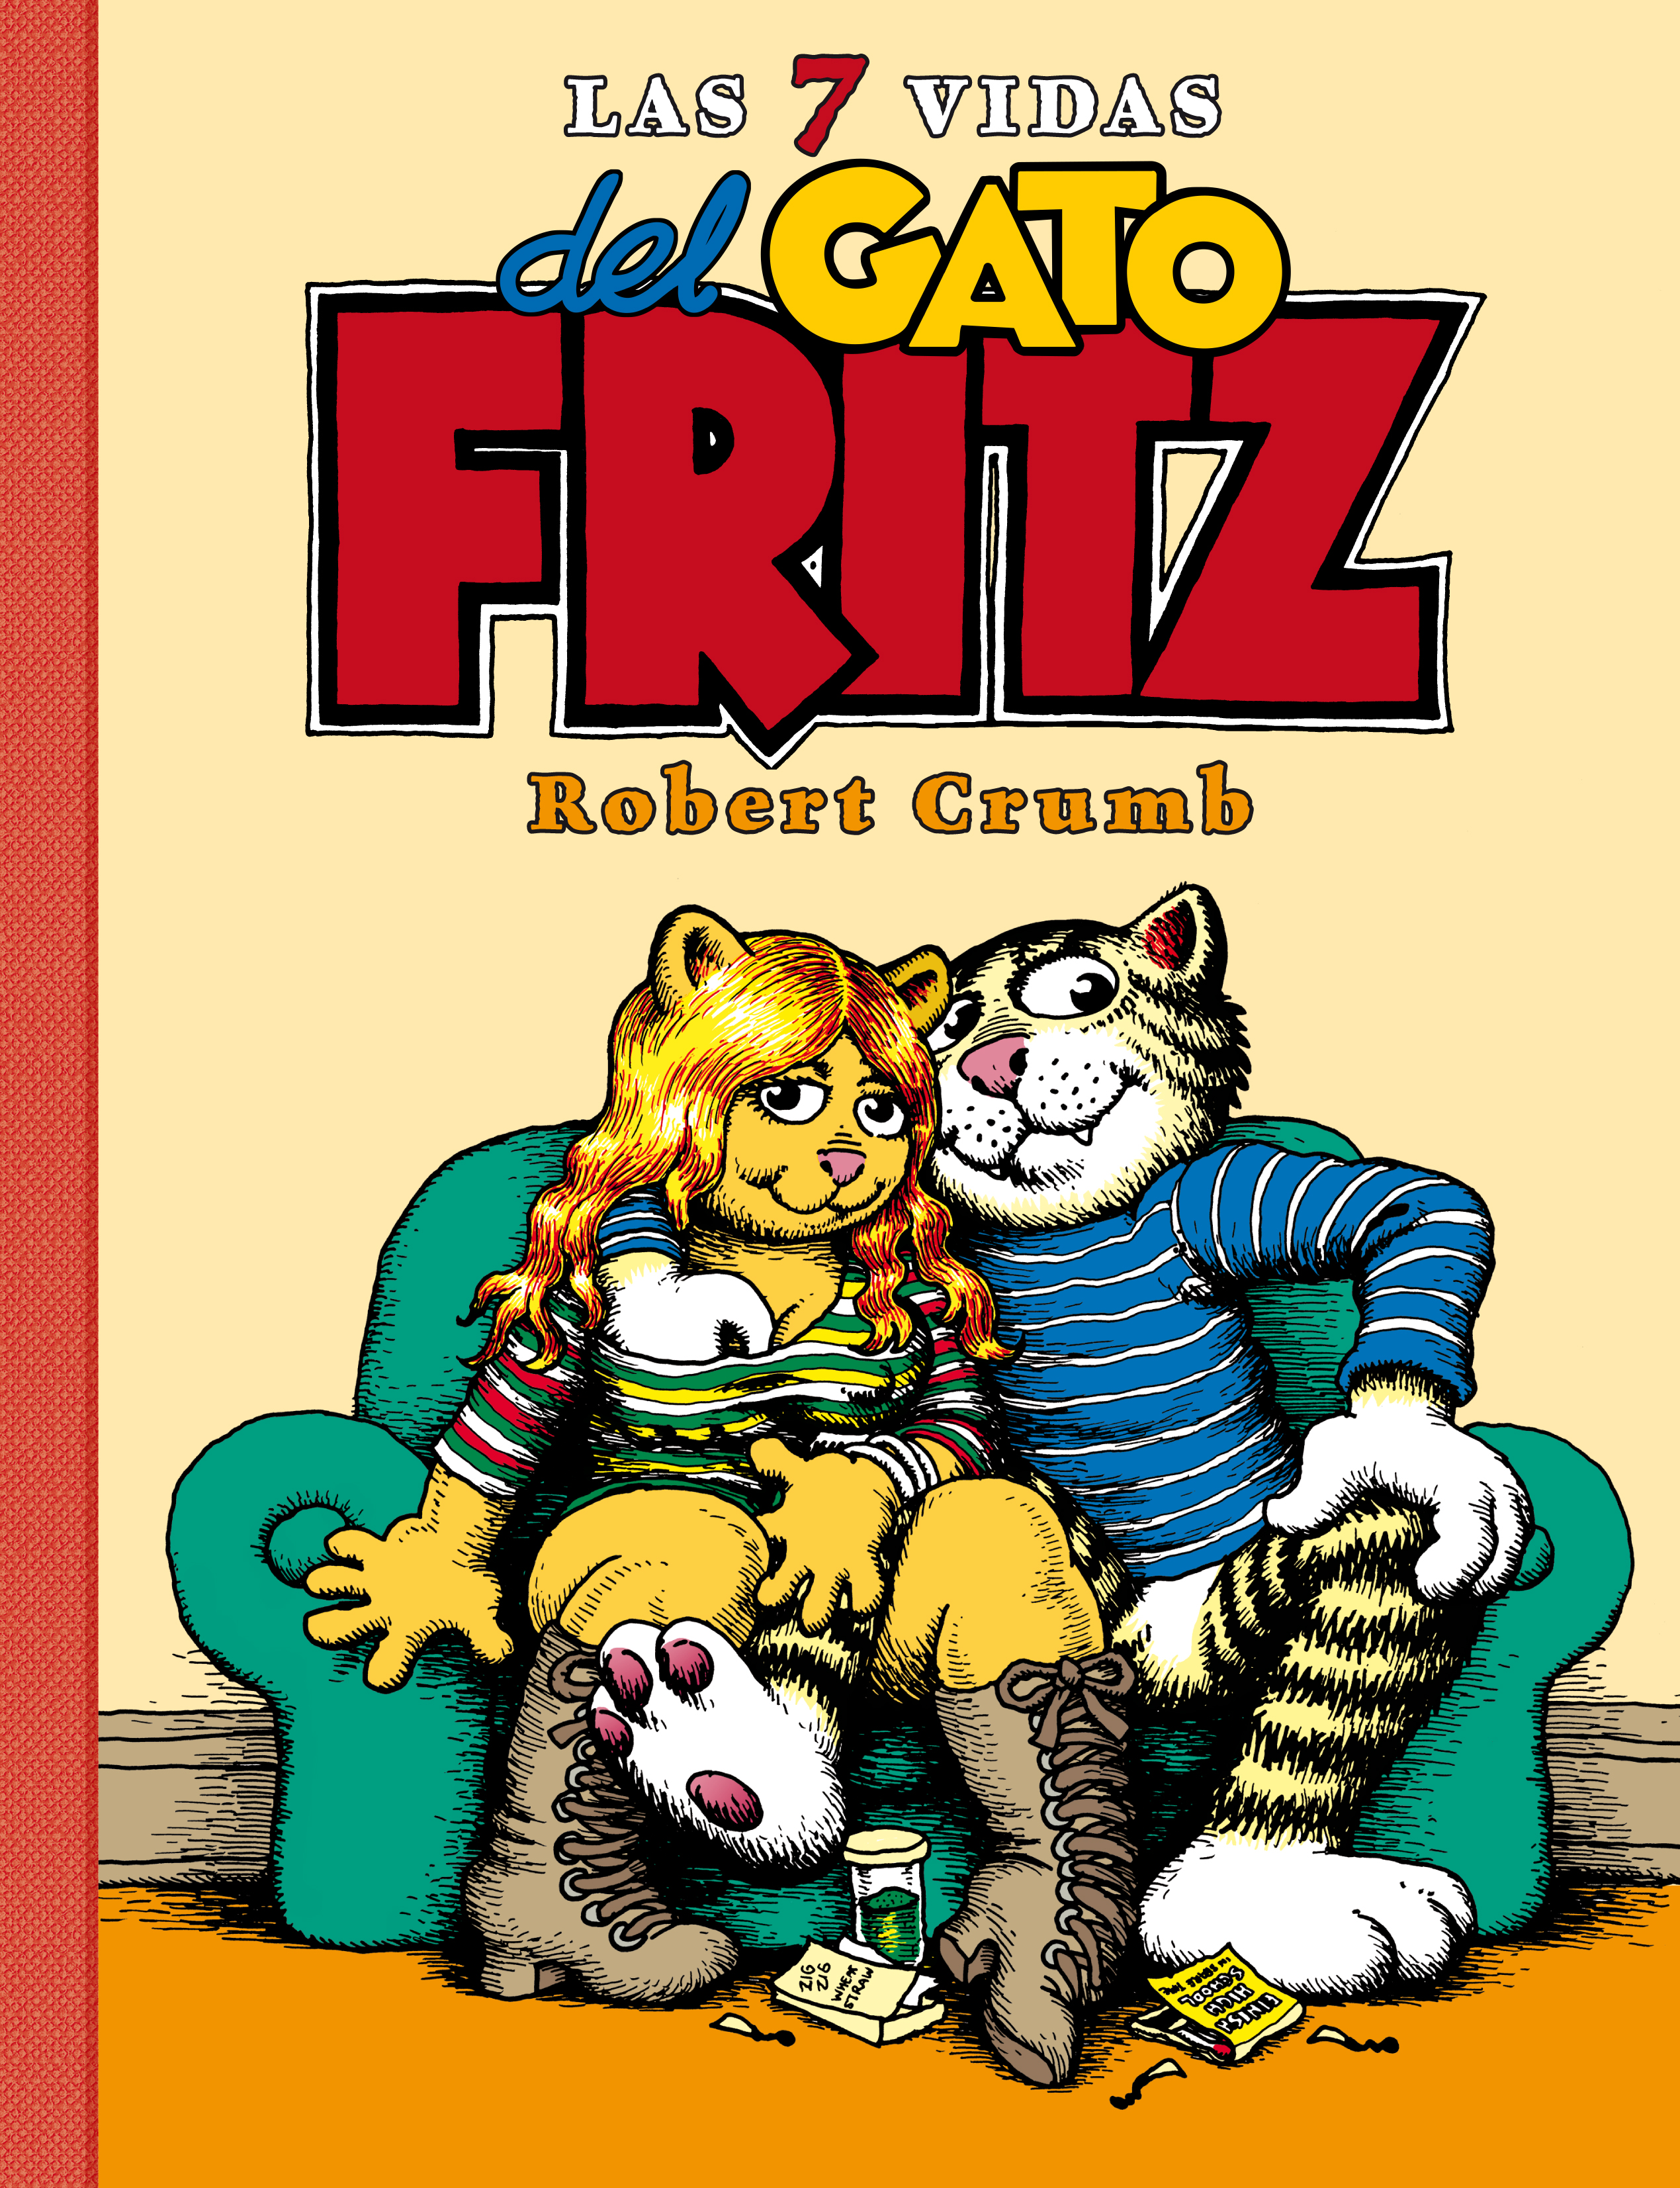 Robert Crumb - Las 7 vidas del Gato Fritz - Cubierta.indd